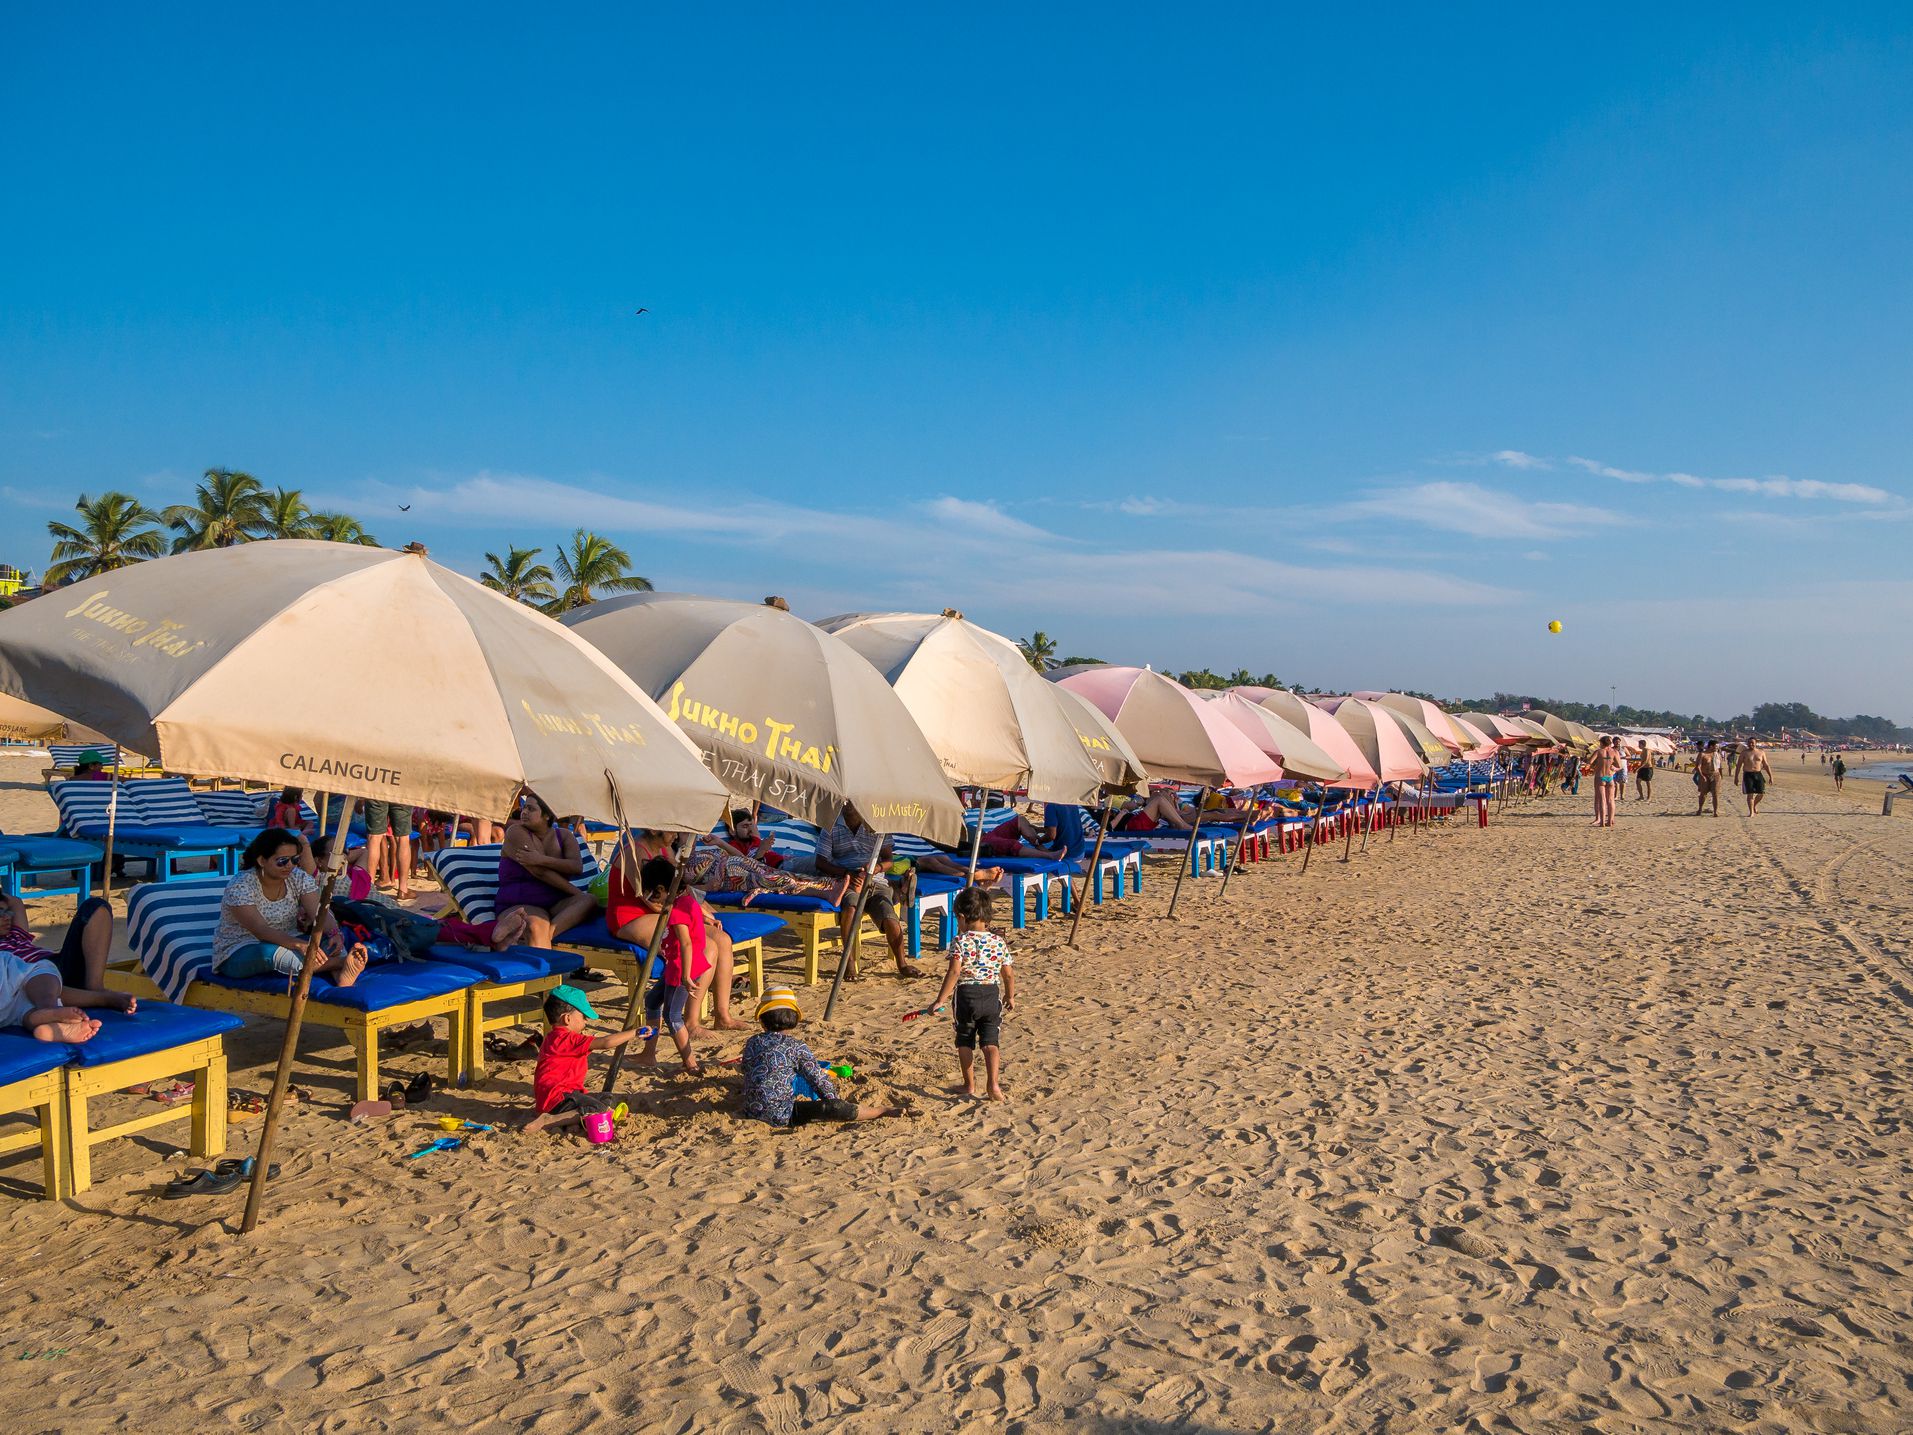 The Most Stunning Beaches In India: Baga beach, Goa